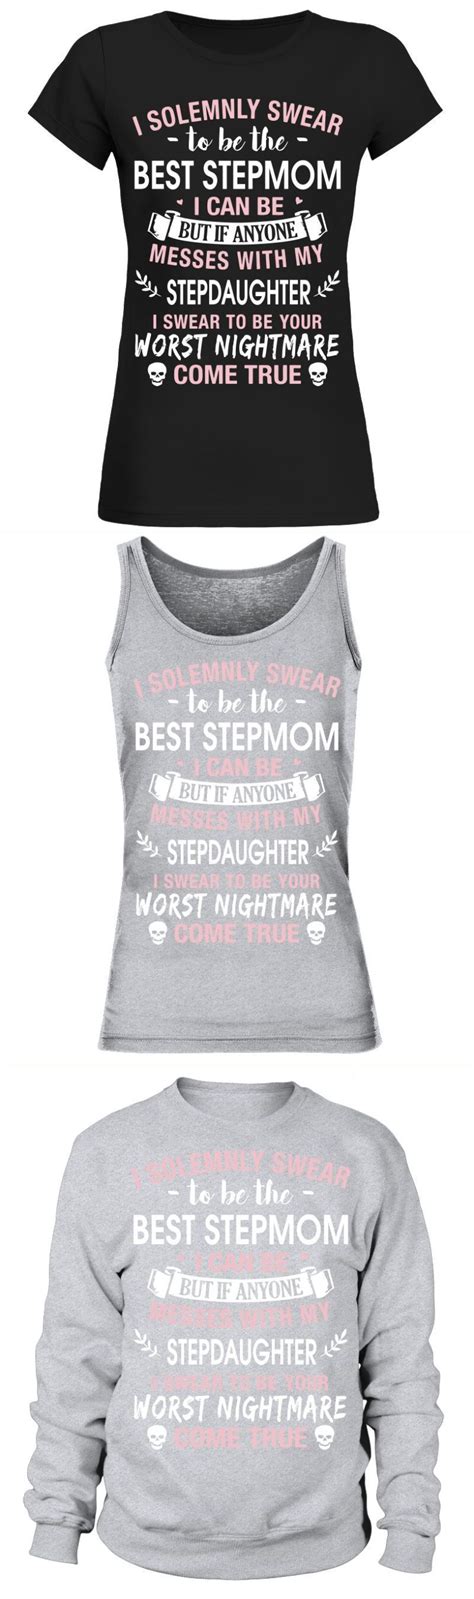 couple t shirt design ideas best stepmom stepdaughter